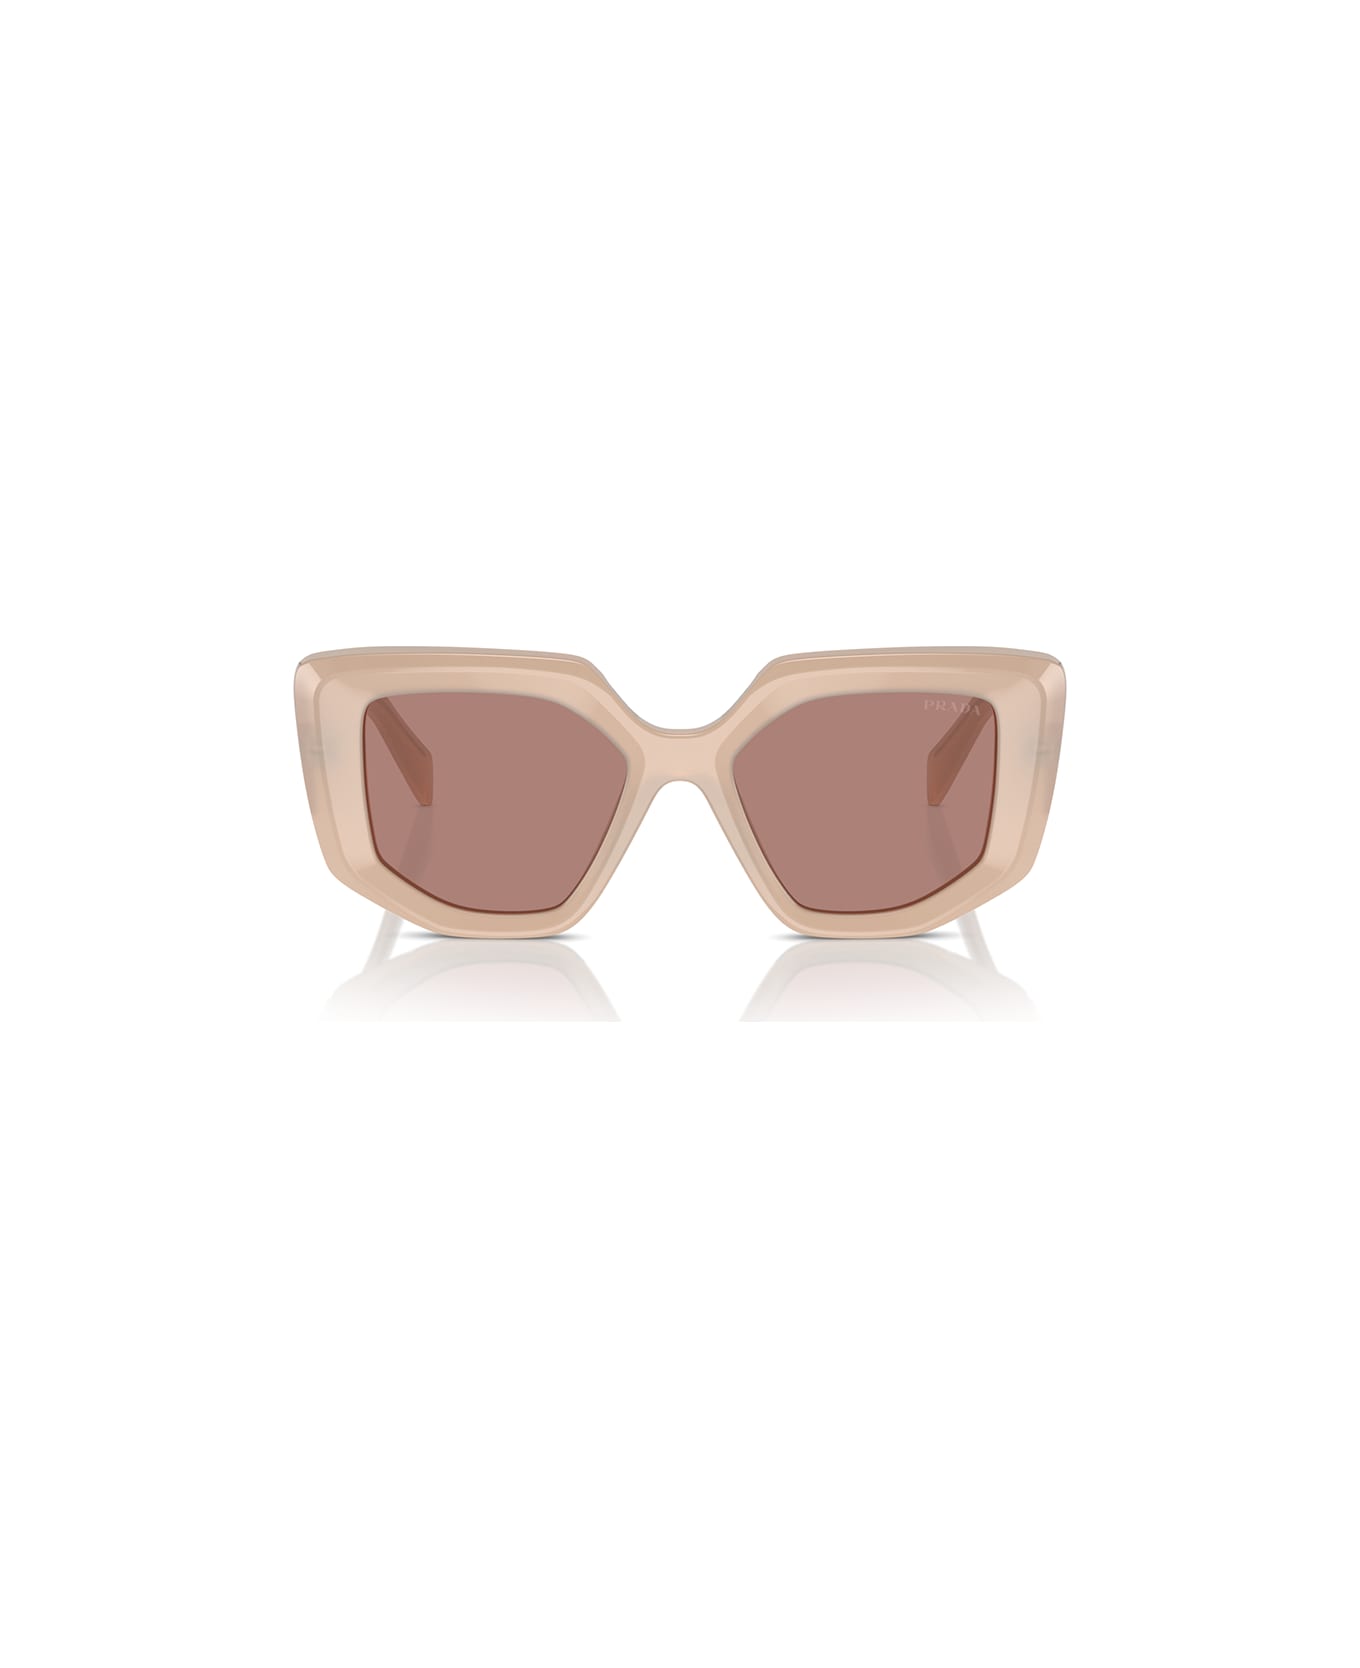 Prada Eyewear Sunglasses - Cipria/Marrone chiaro